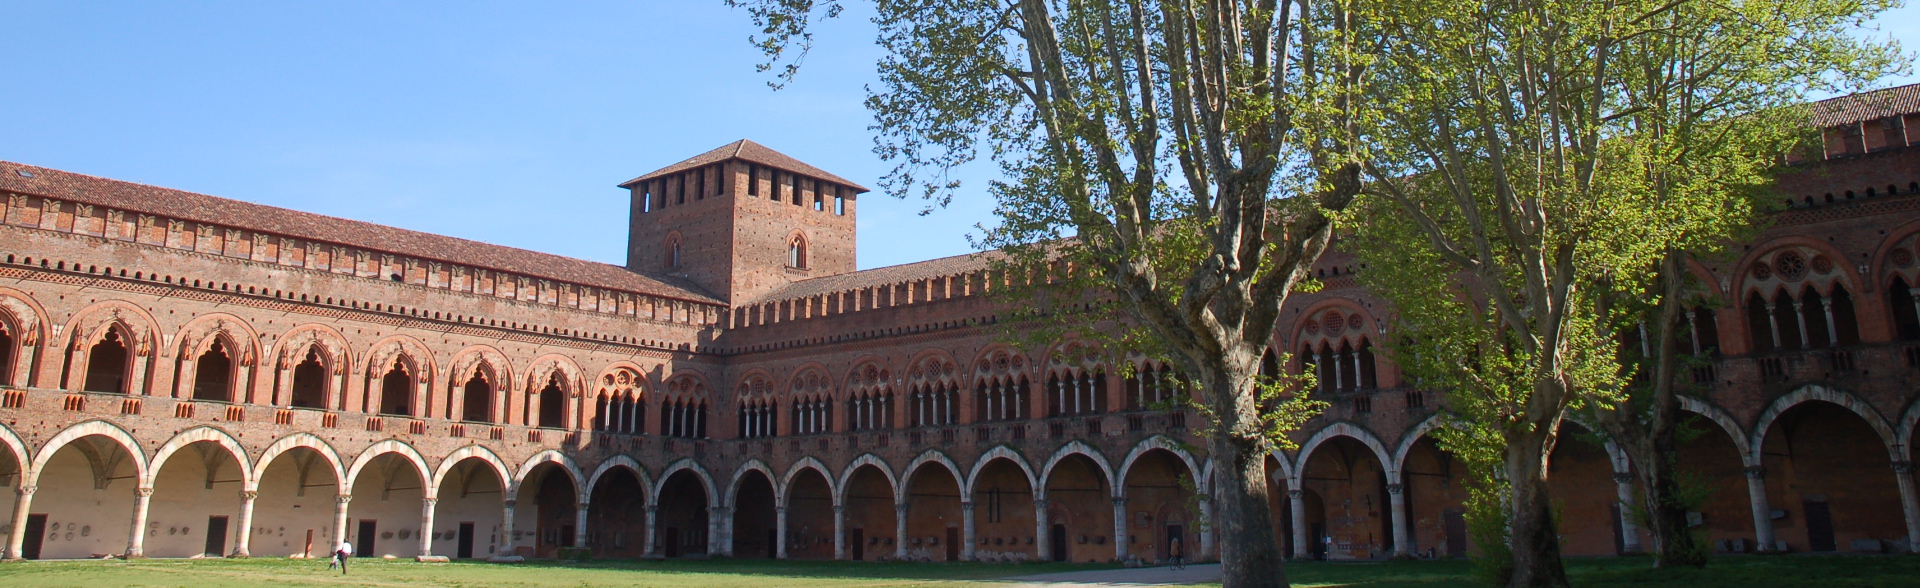 Musei Civici di Pavia